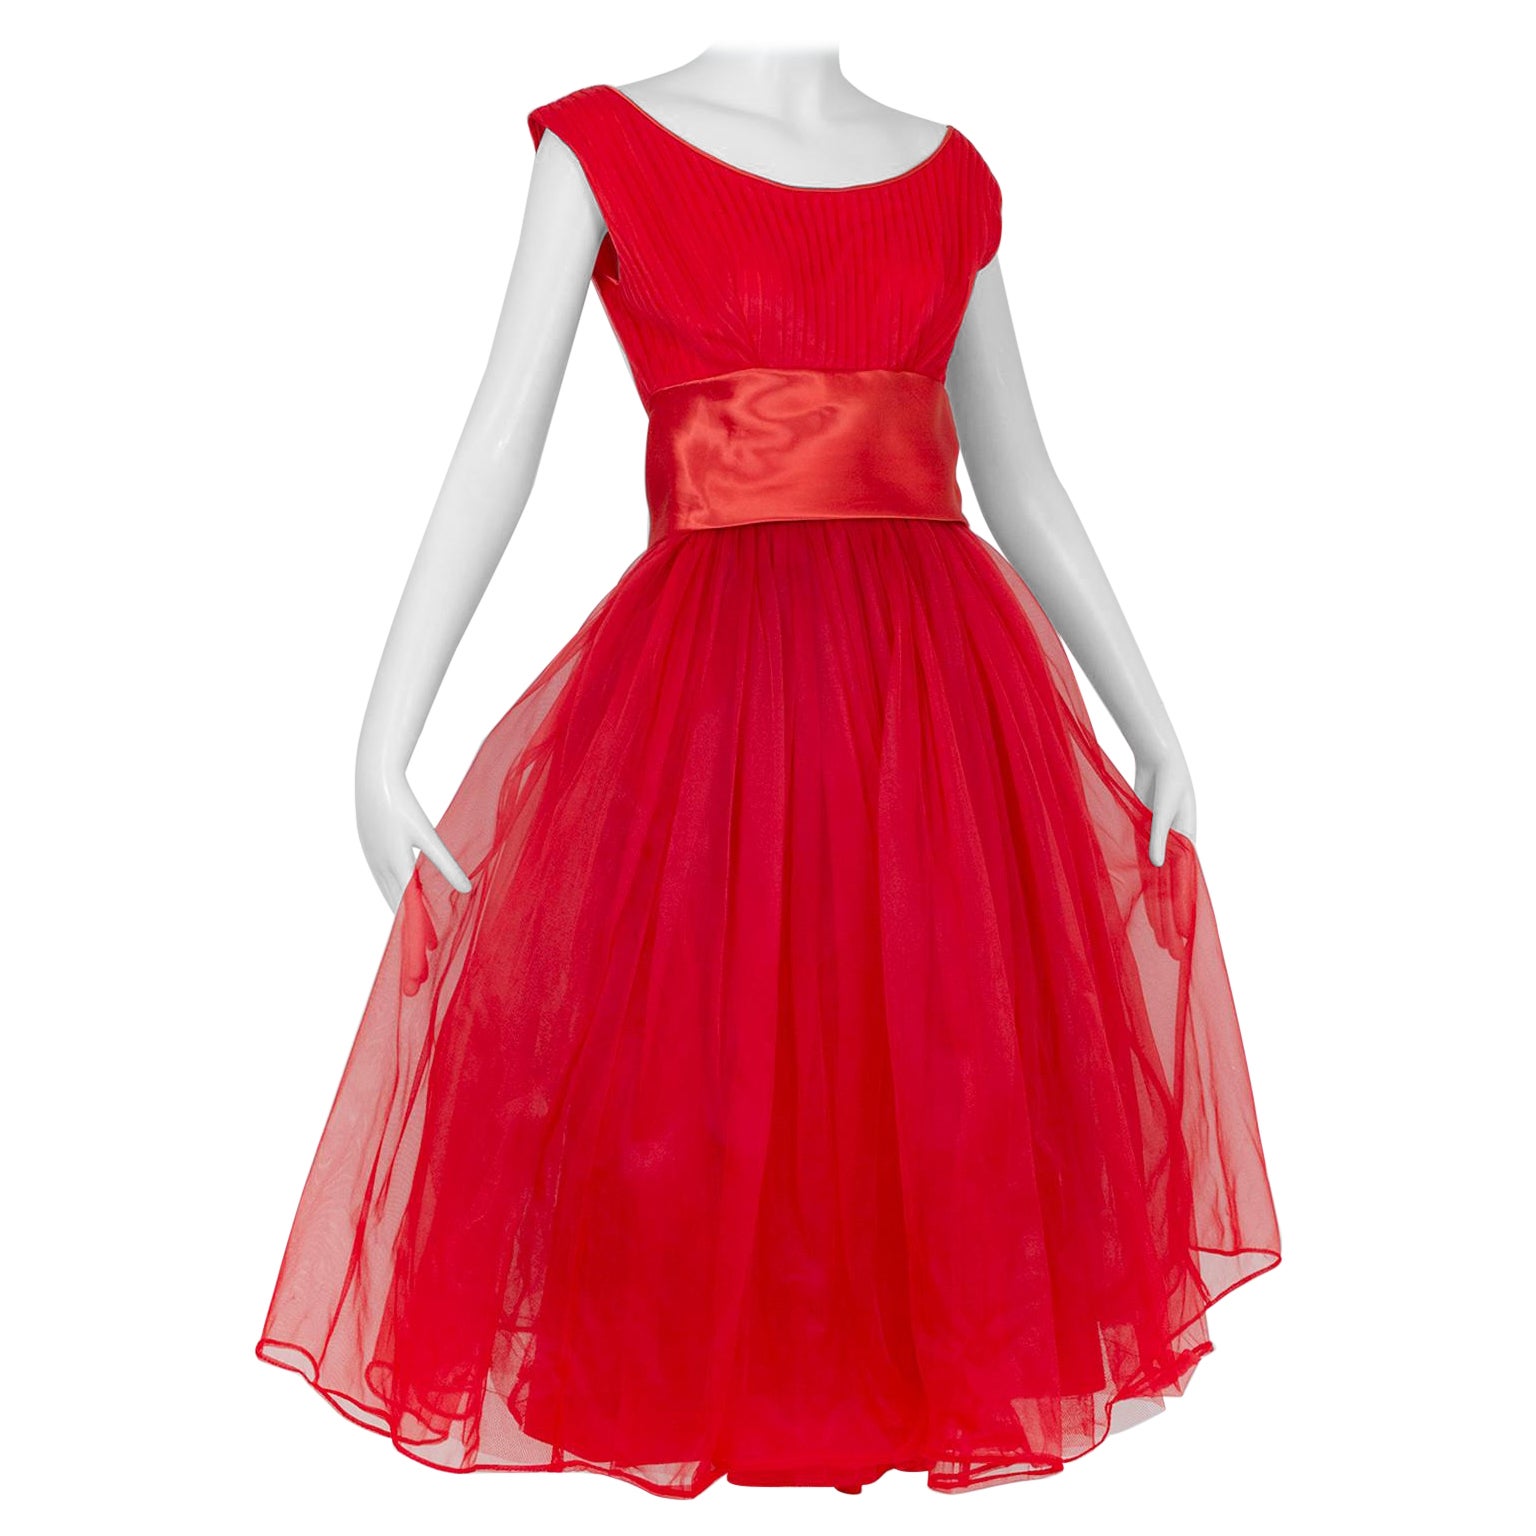 Emma Domb Red Bib Front Ballerina Party Dress with Satin Cummerbund – S, 1950s For Sale